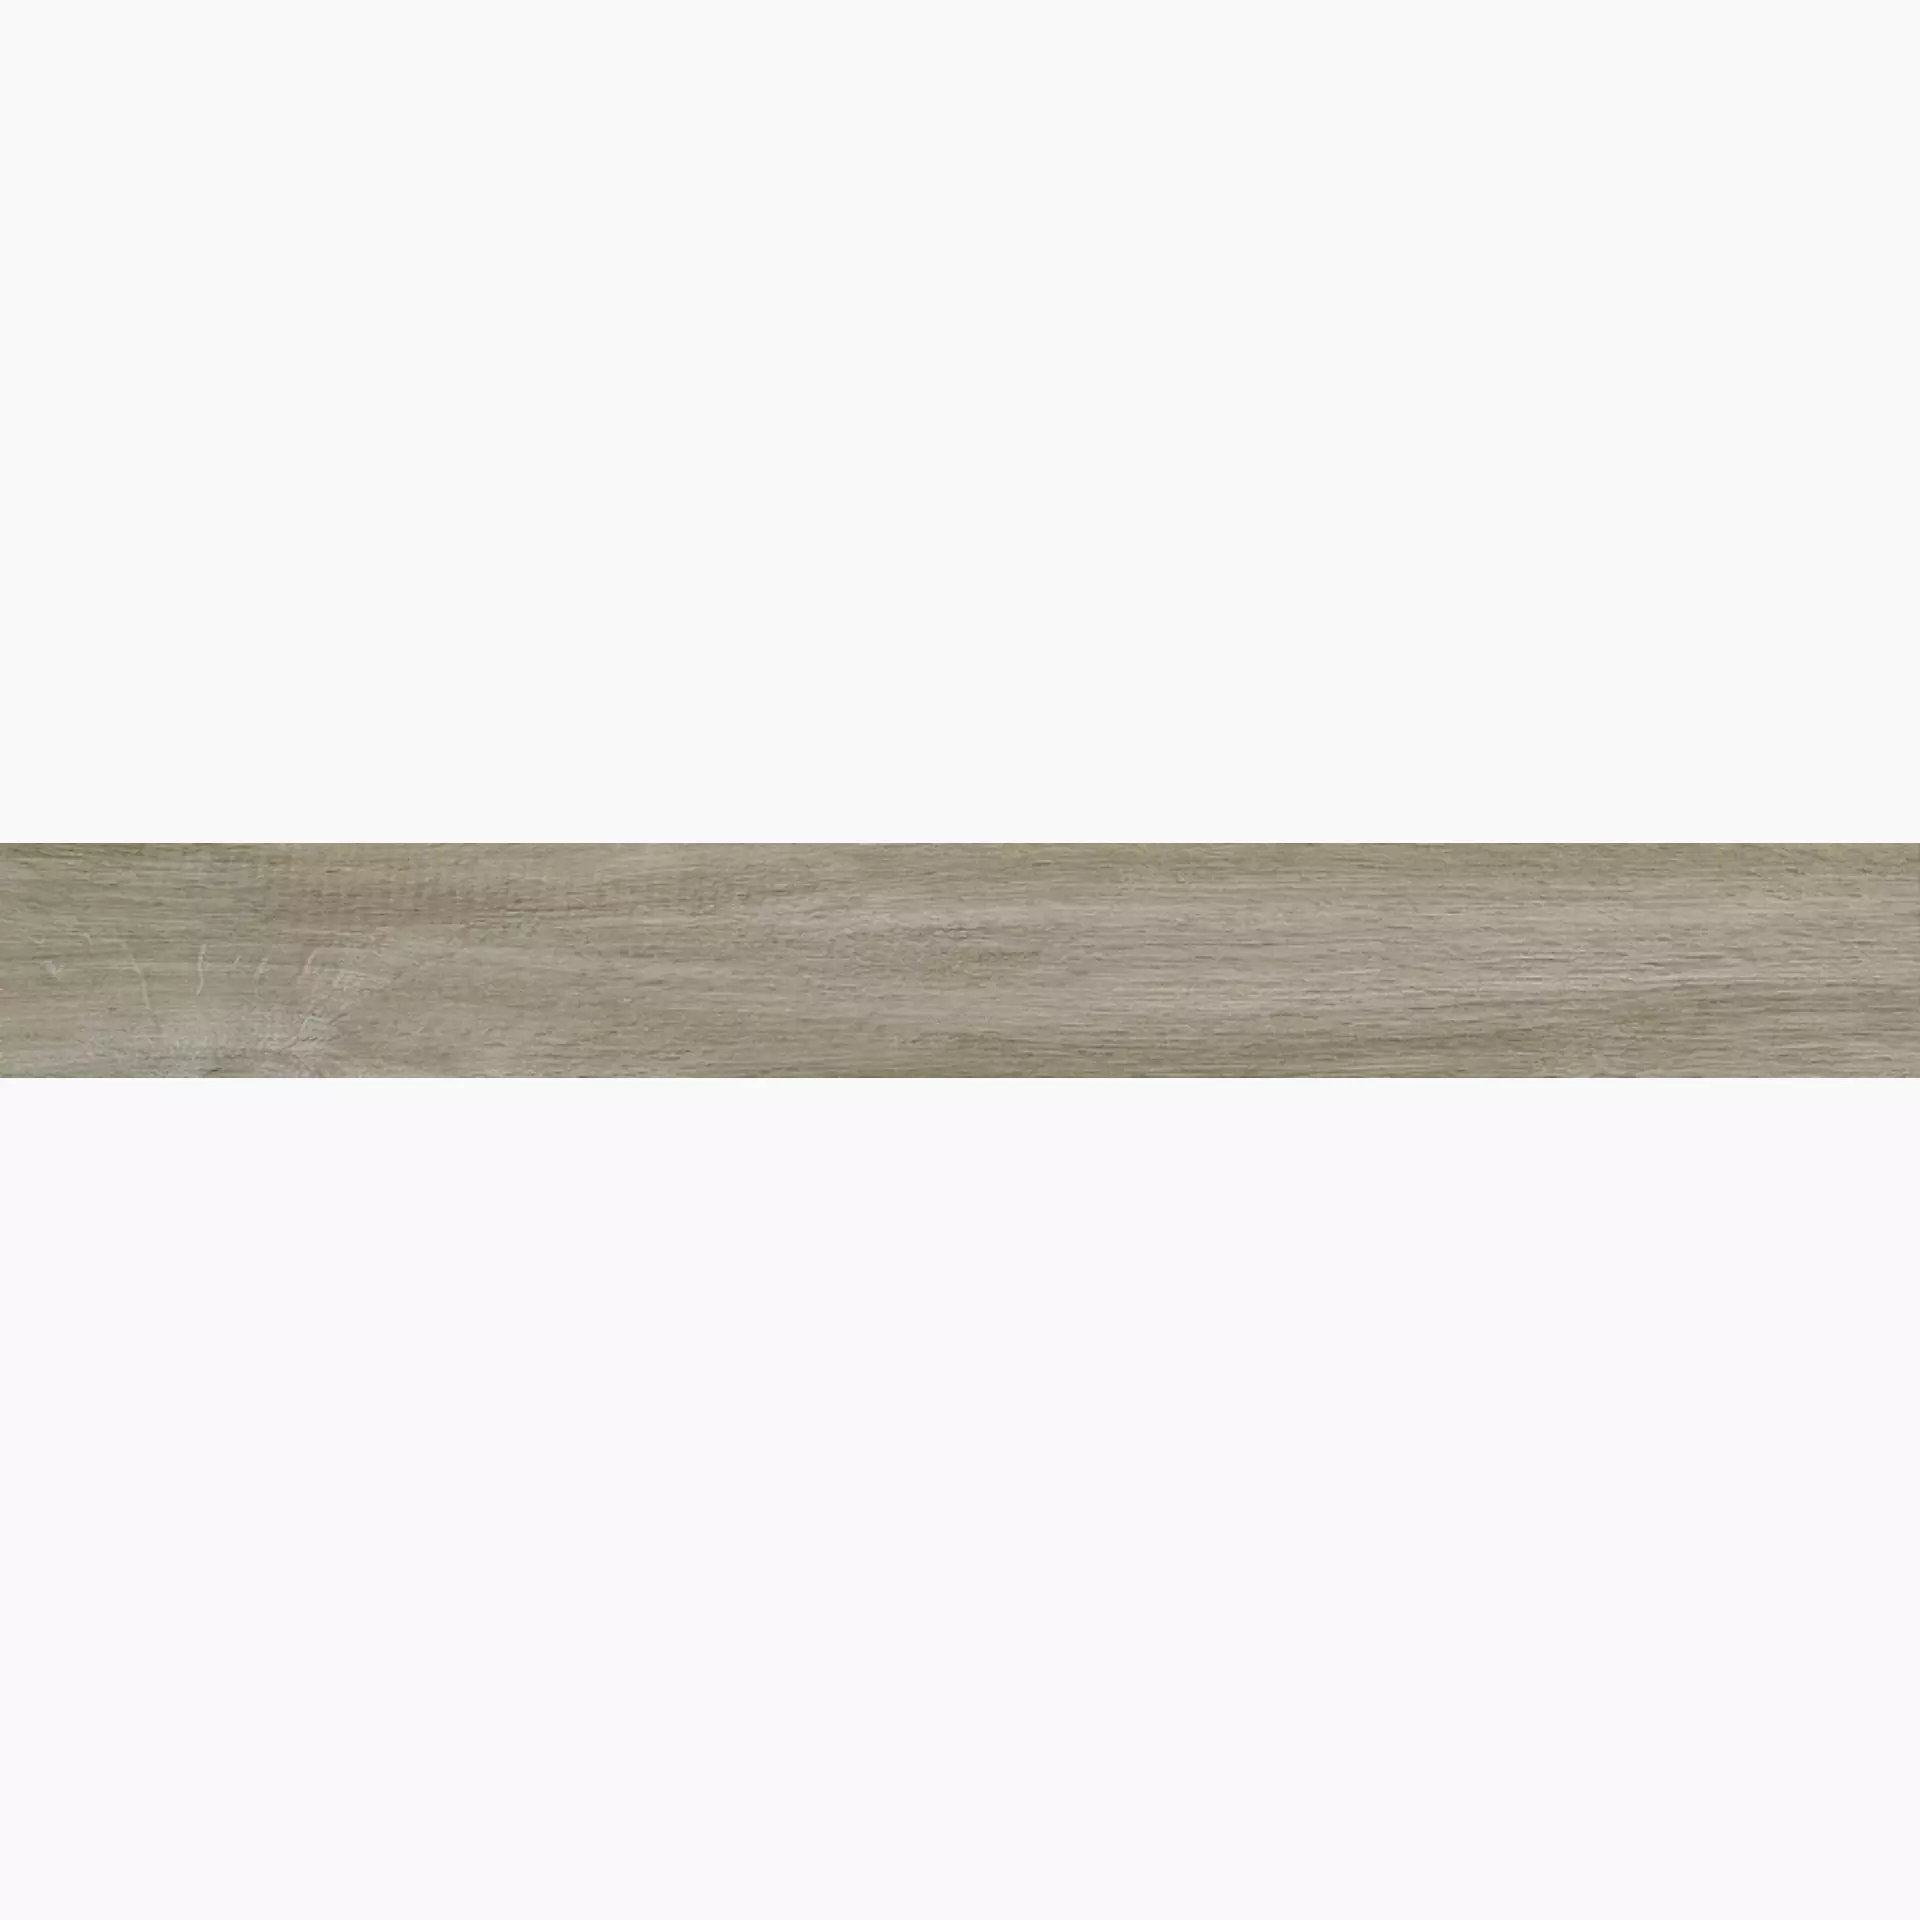 Iris E-Wood Grey Naturale 898012 11x90cm 9mm